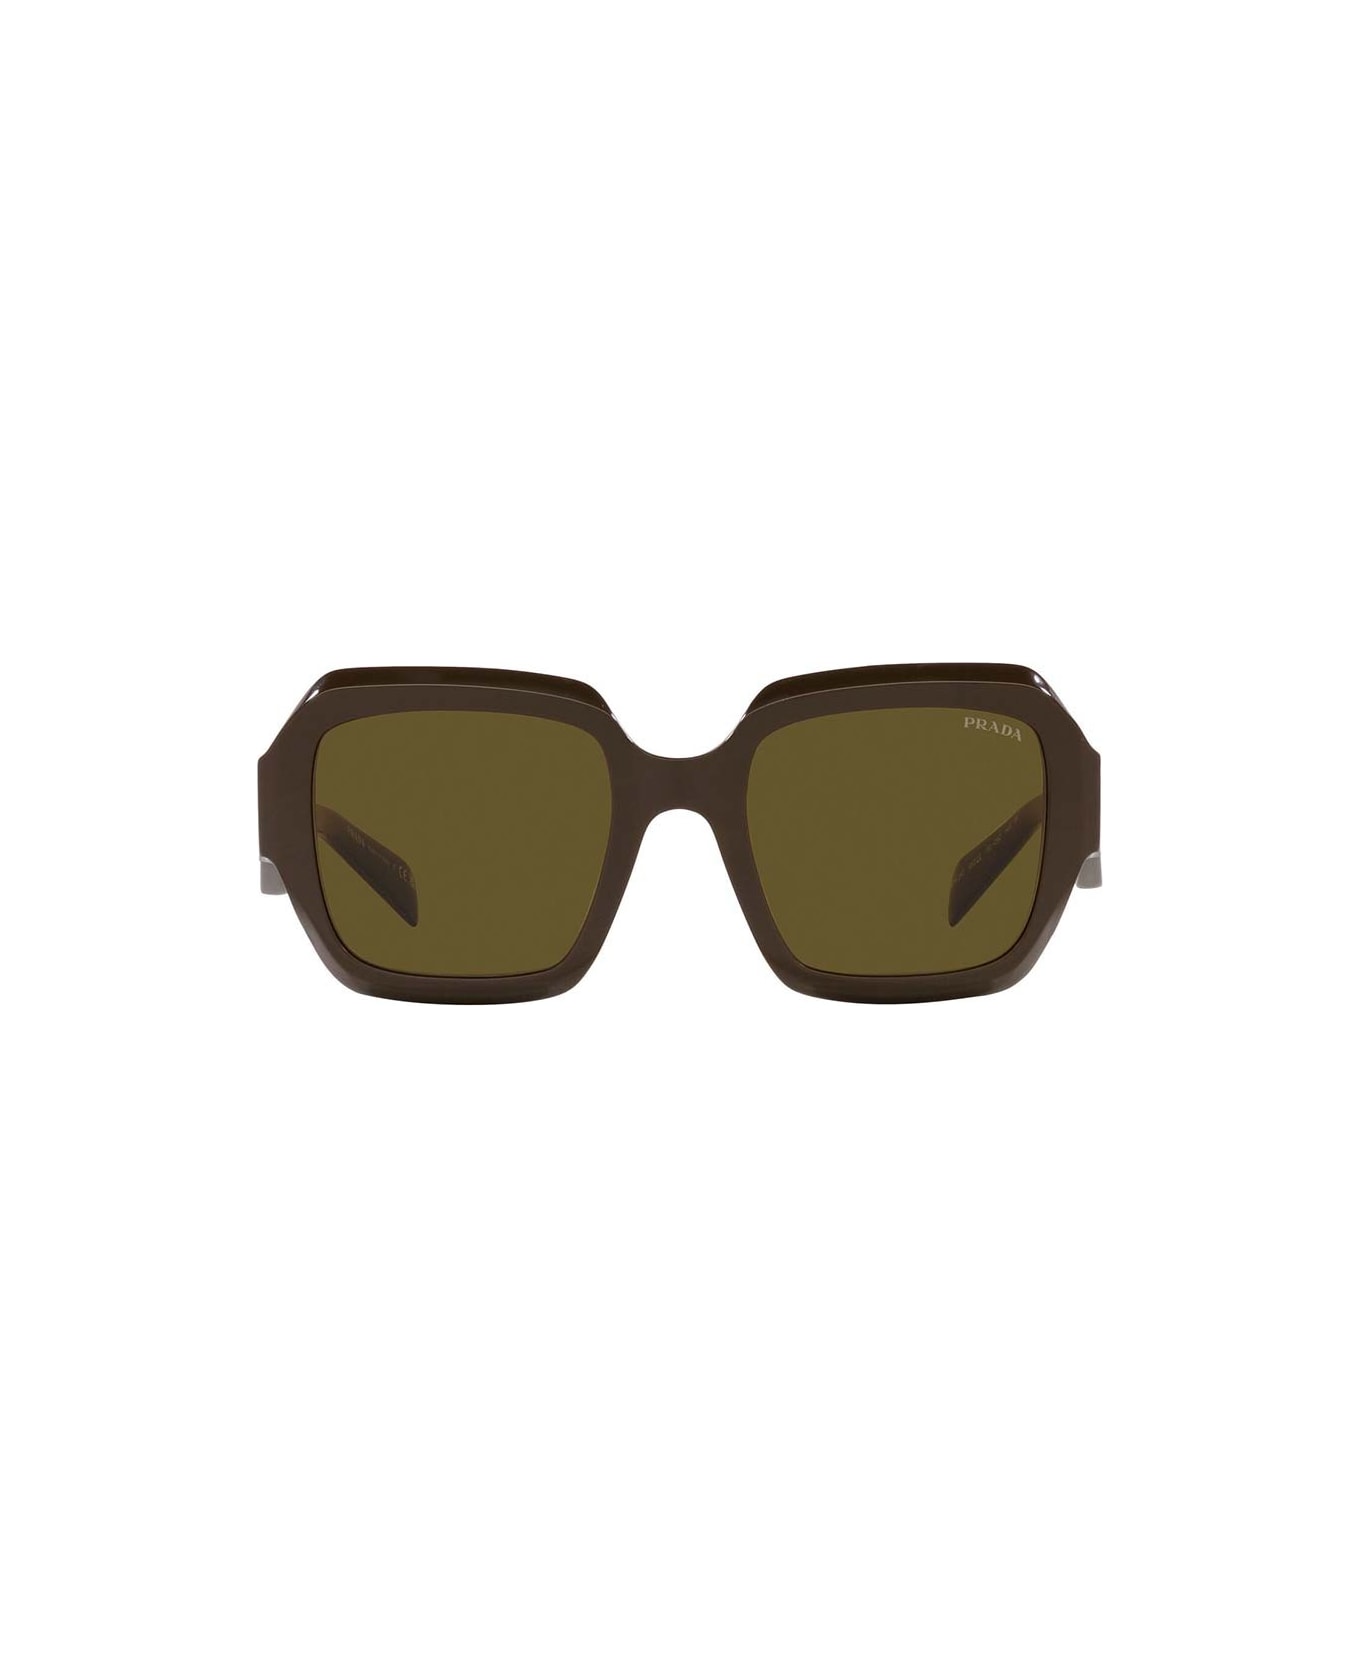 Prada Eyewear Sunglasses - 15L09Z サングラス